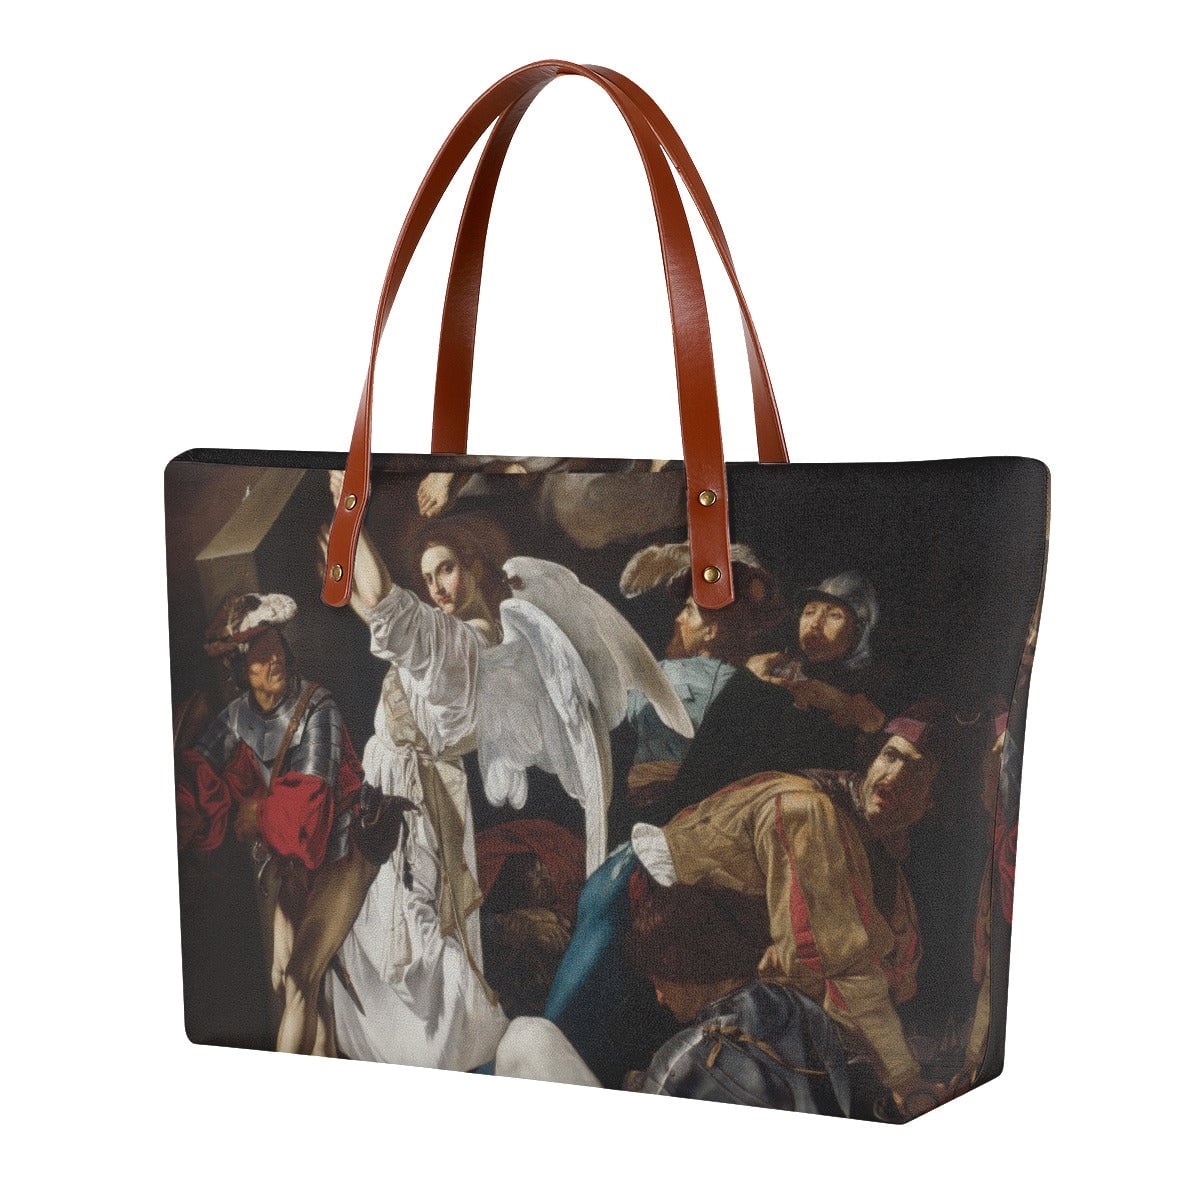 The Resurrection by Caravaggio Tote Bag